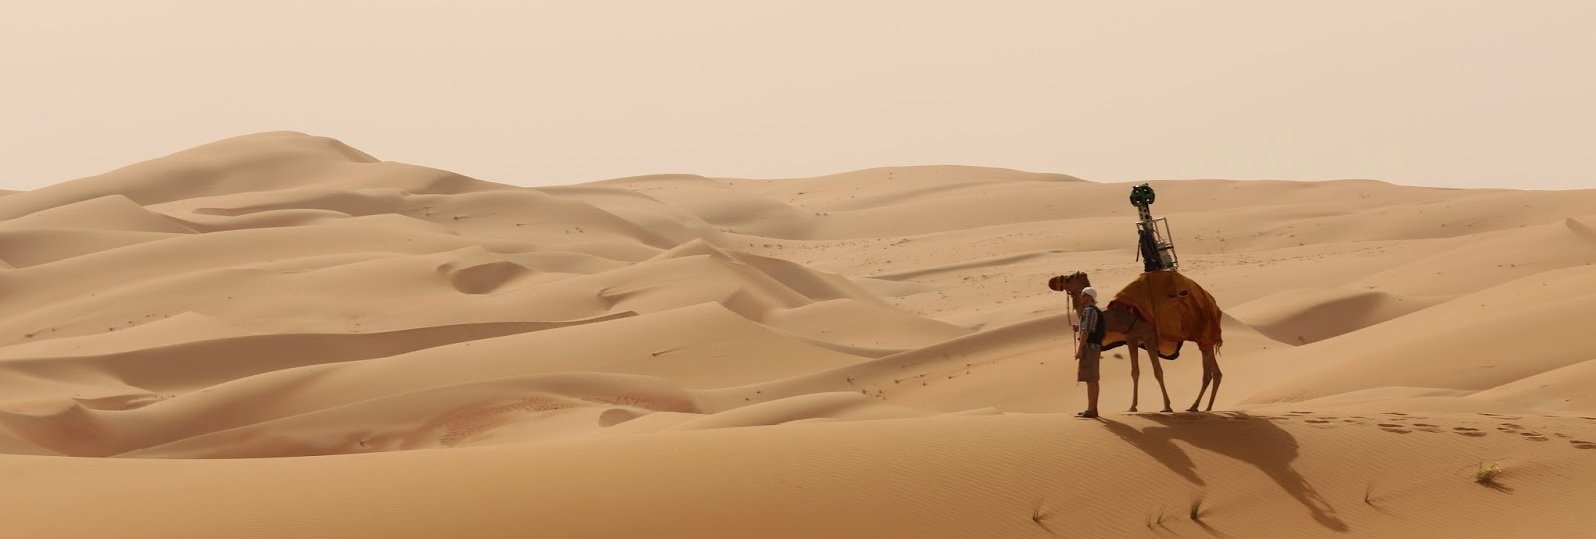 Deserto arabico - storia hashish legale